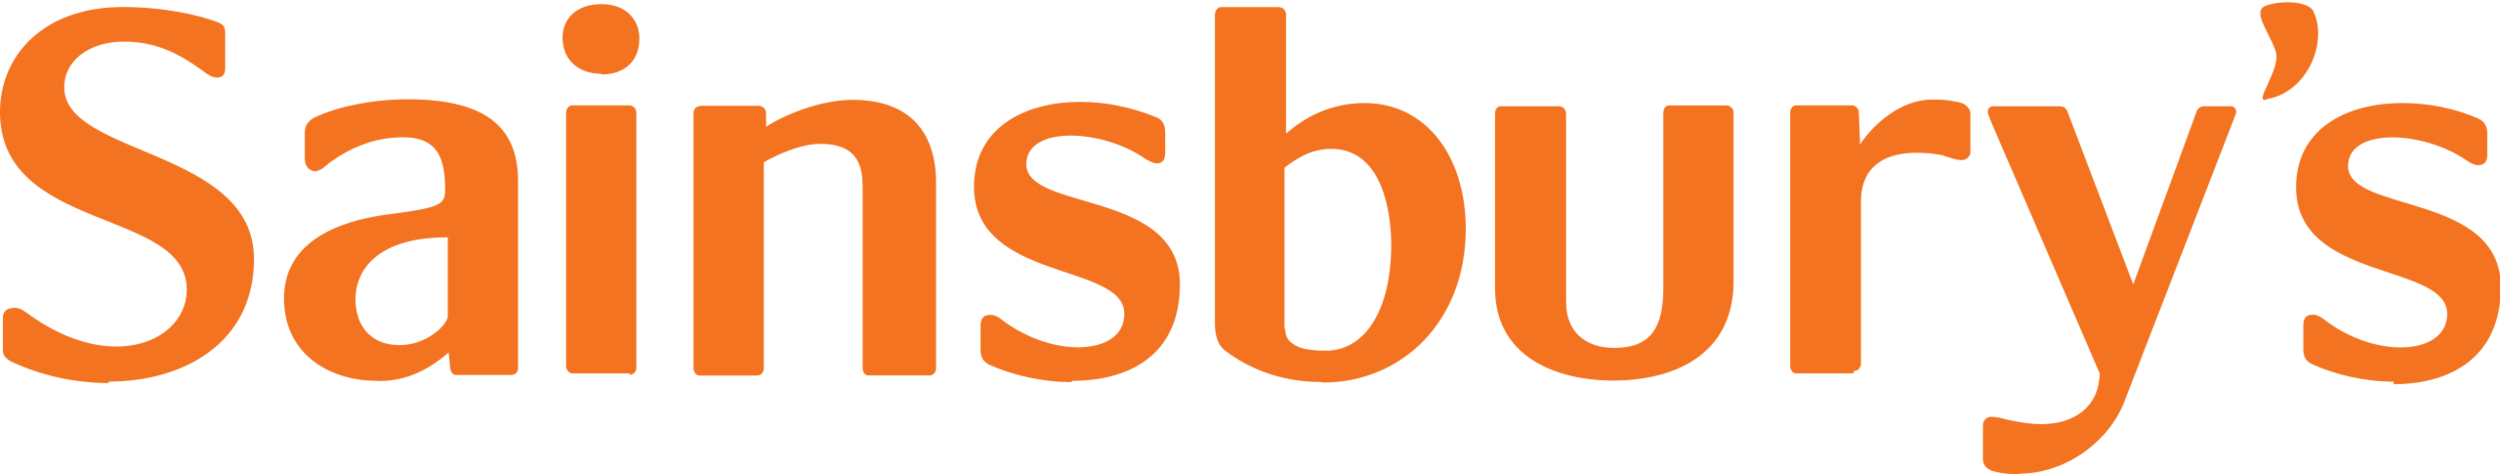 Sainsbury's_Logo.svg.png